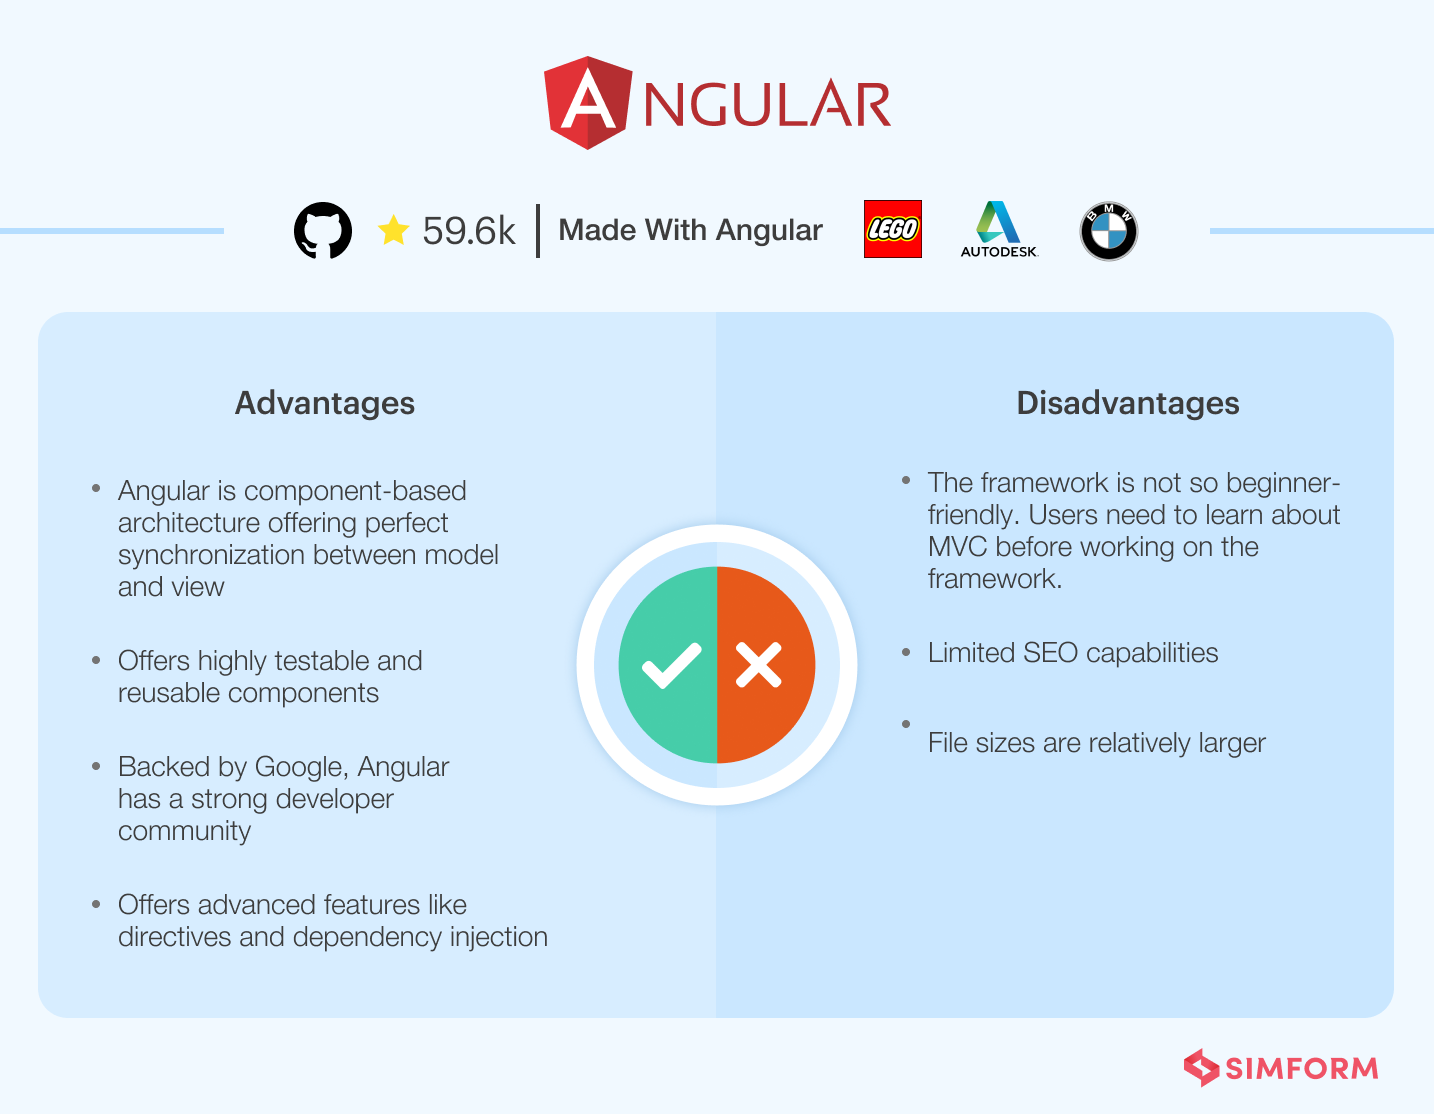 Angular advantages and disadvantages